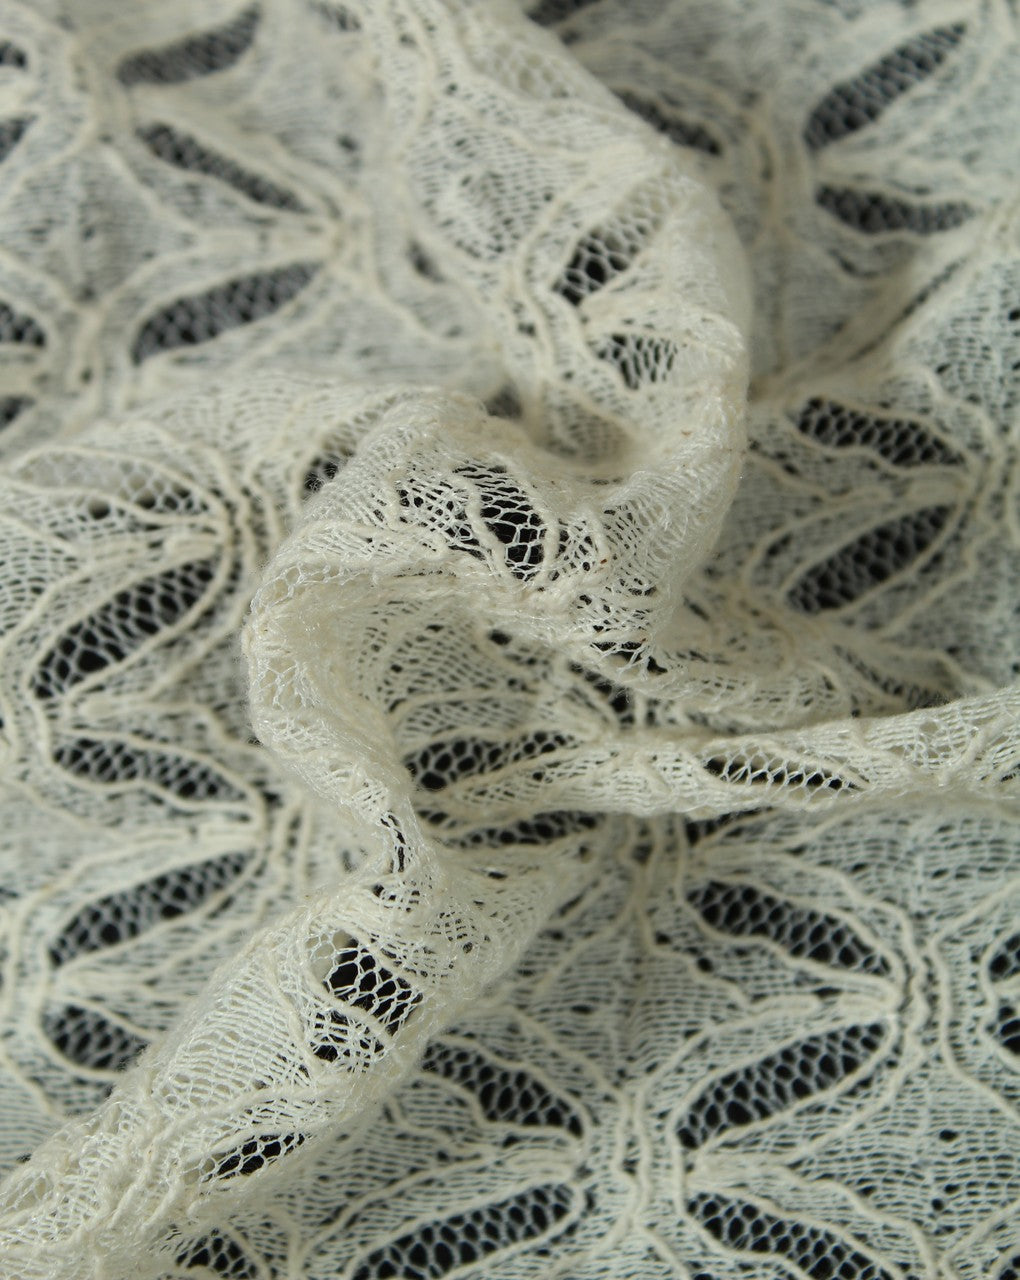 Greige Cotton Chevron Design Lace Cut Work Fabric